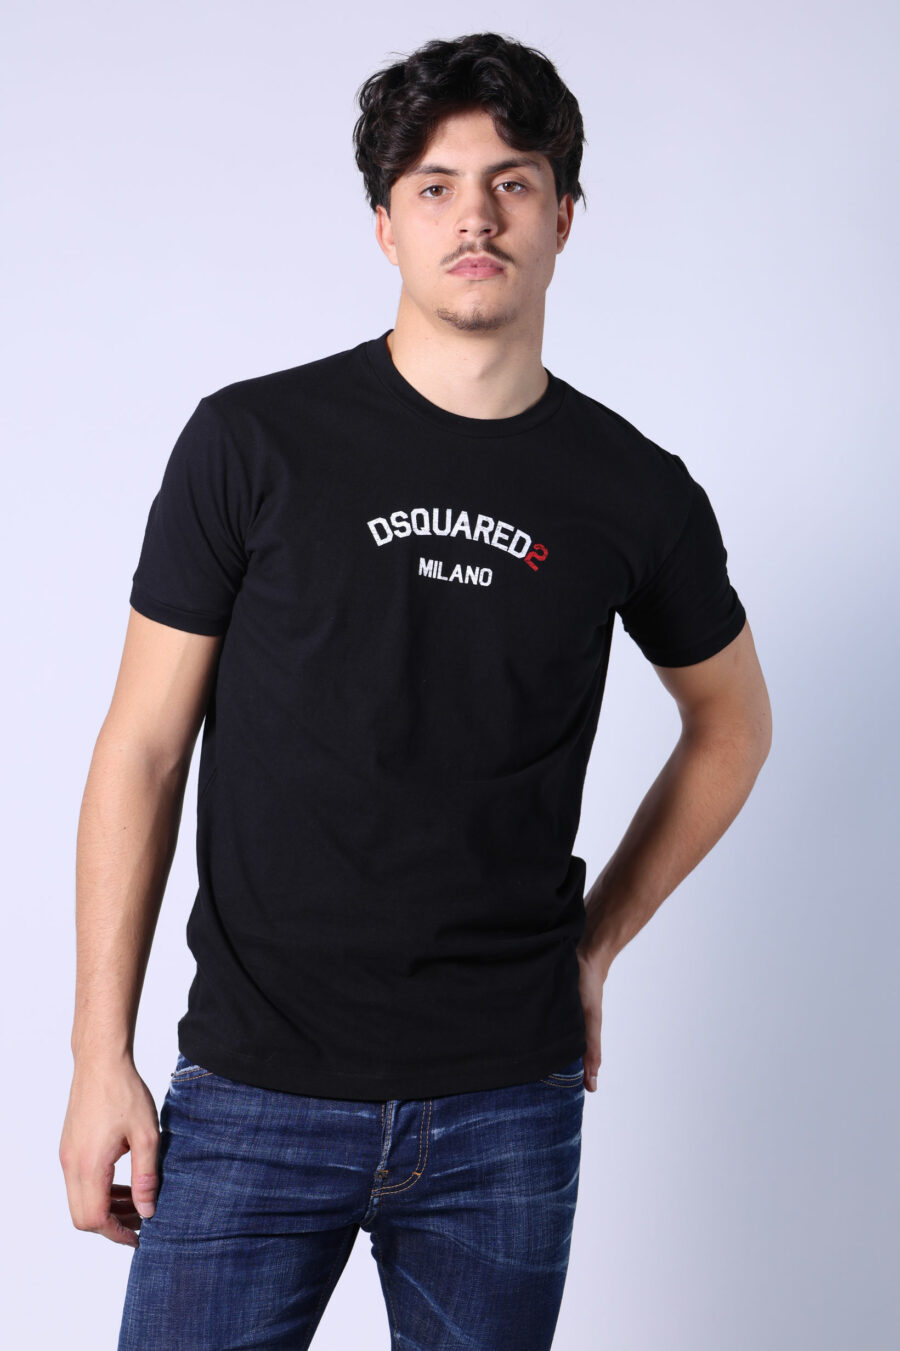 Schwarzes T-Shirt mit Minilogue "dsquared2 milano" - Untitled Catalog 05472